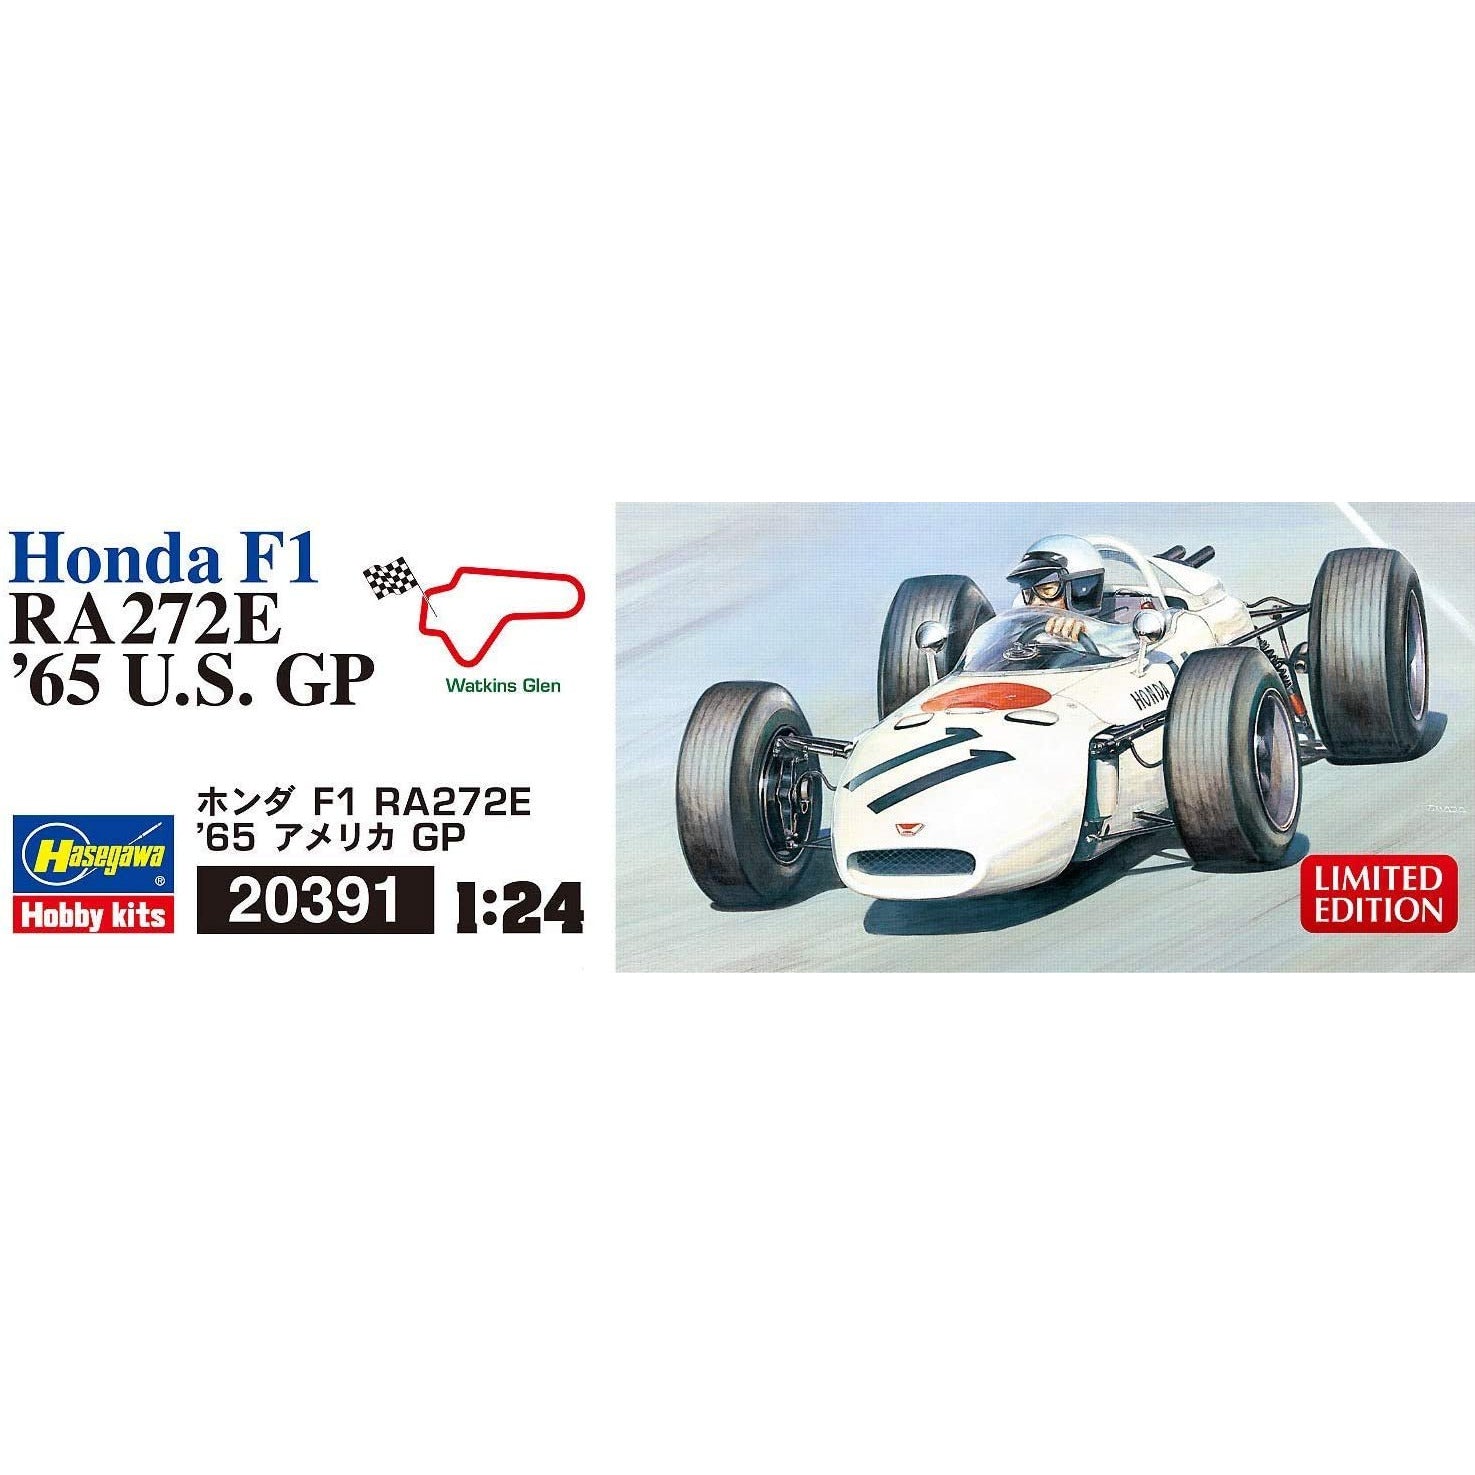 1965 Honda F1 US Grand Prix 1/24 by Hasegawa